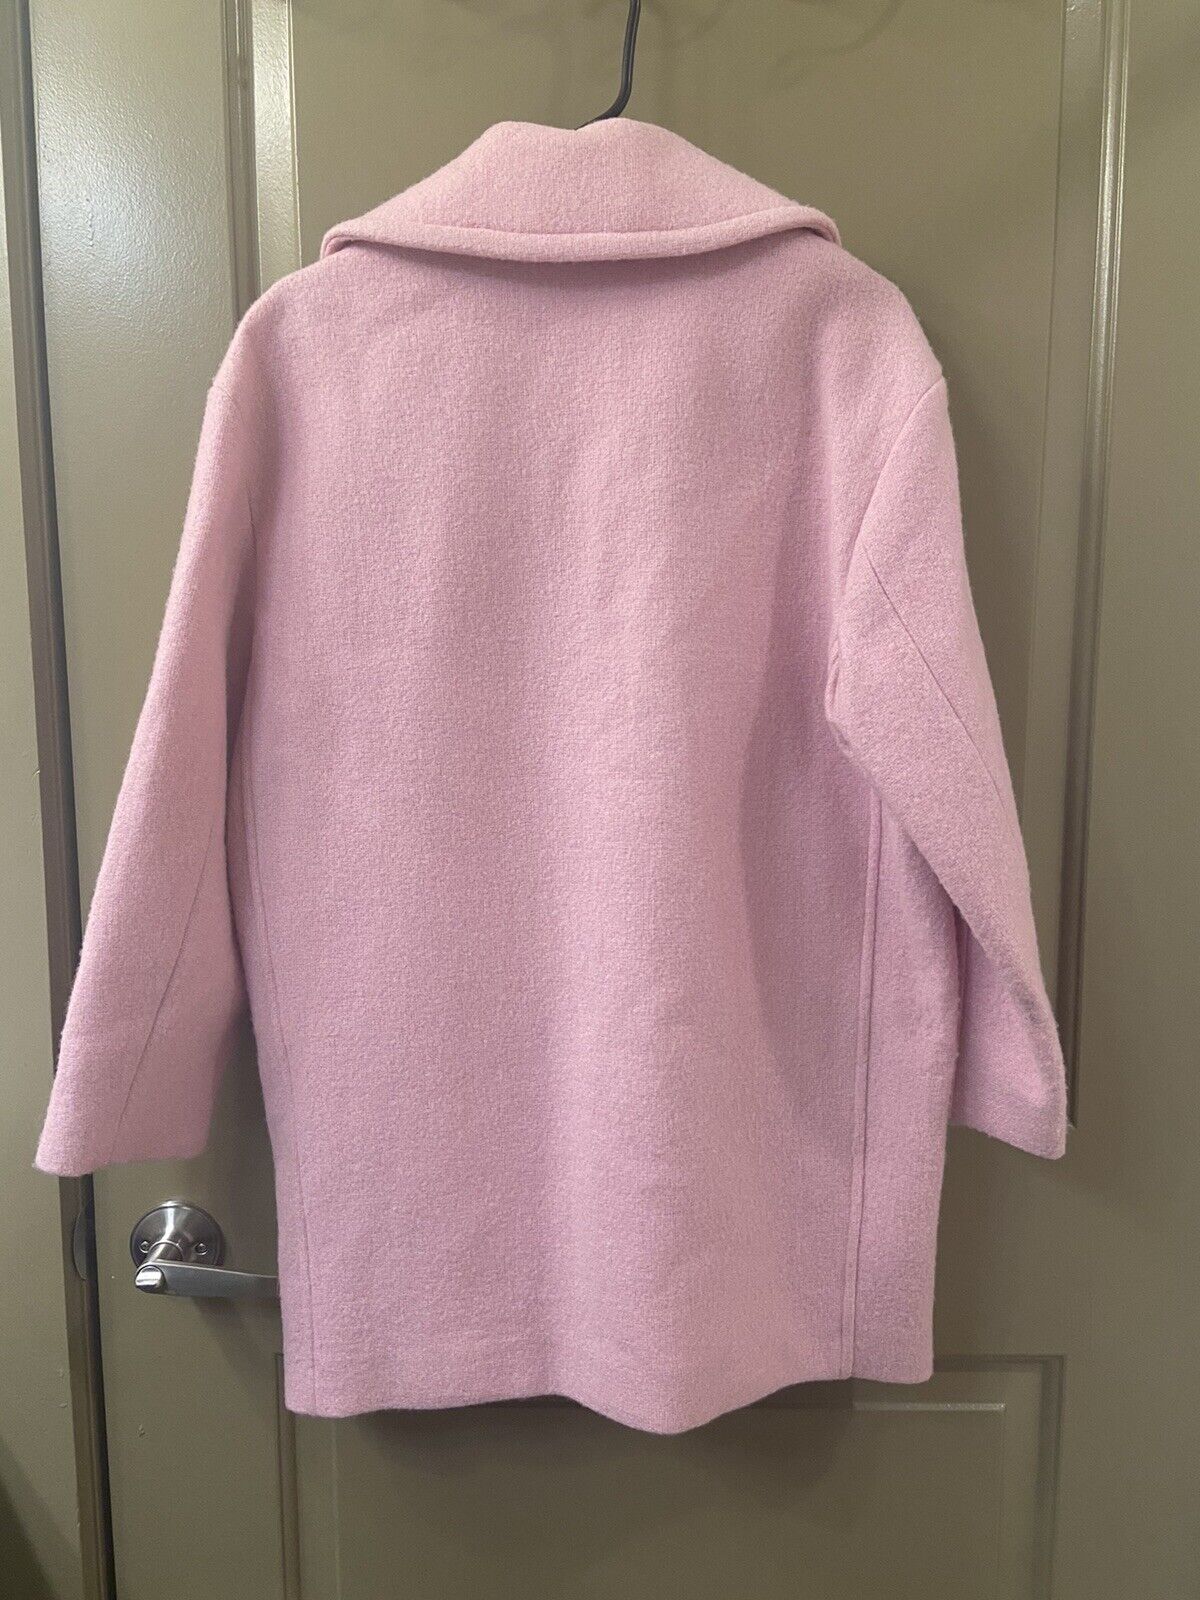 ulla johnson wool blend pink winter jacket sz S (… - image 7